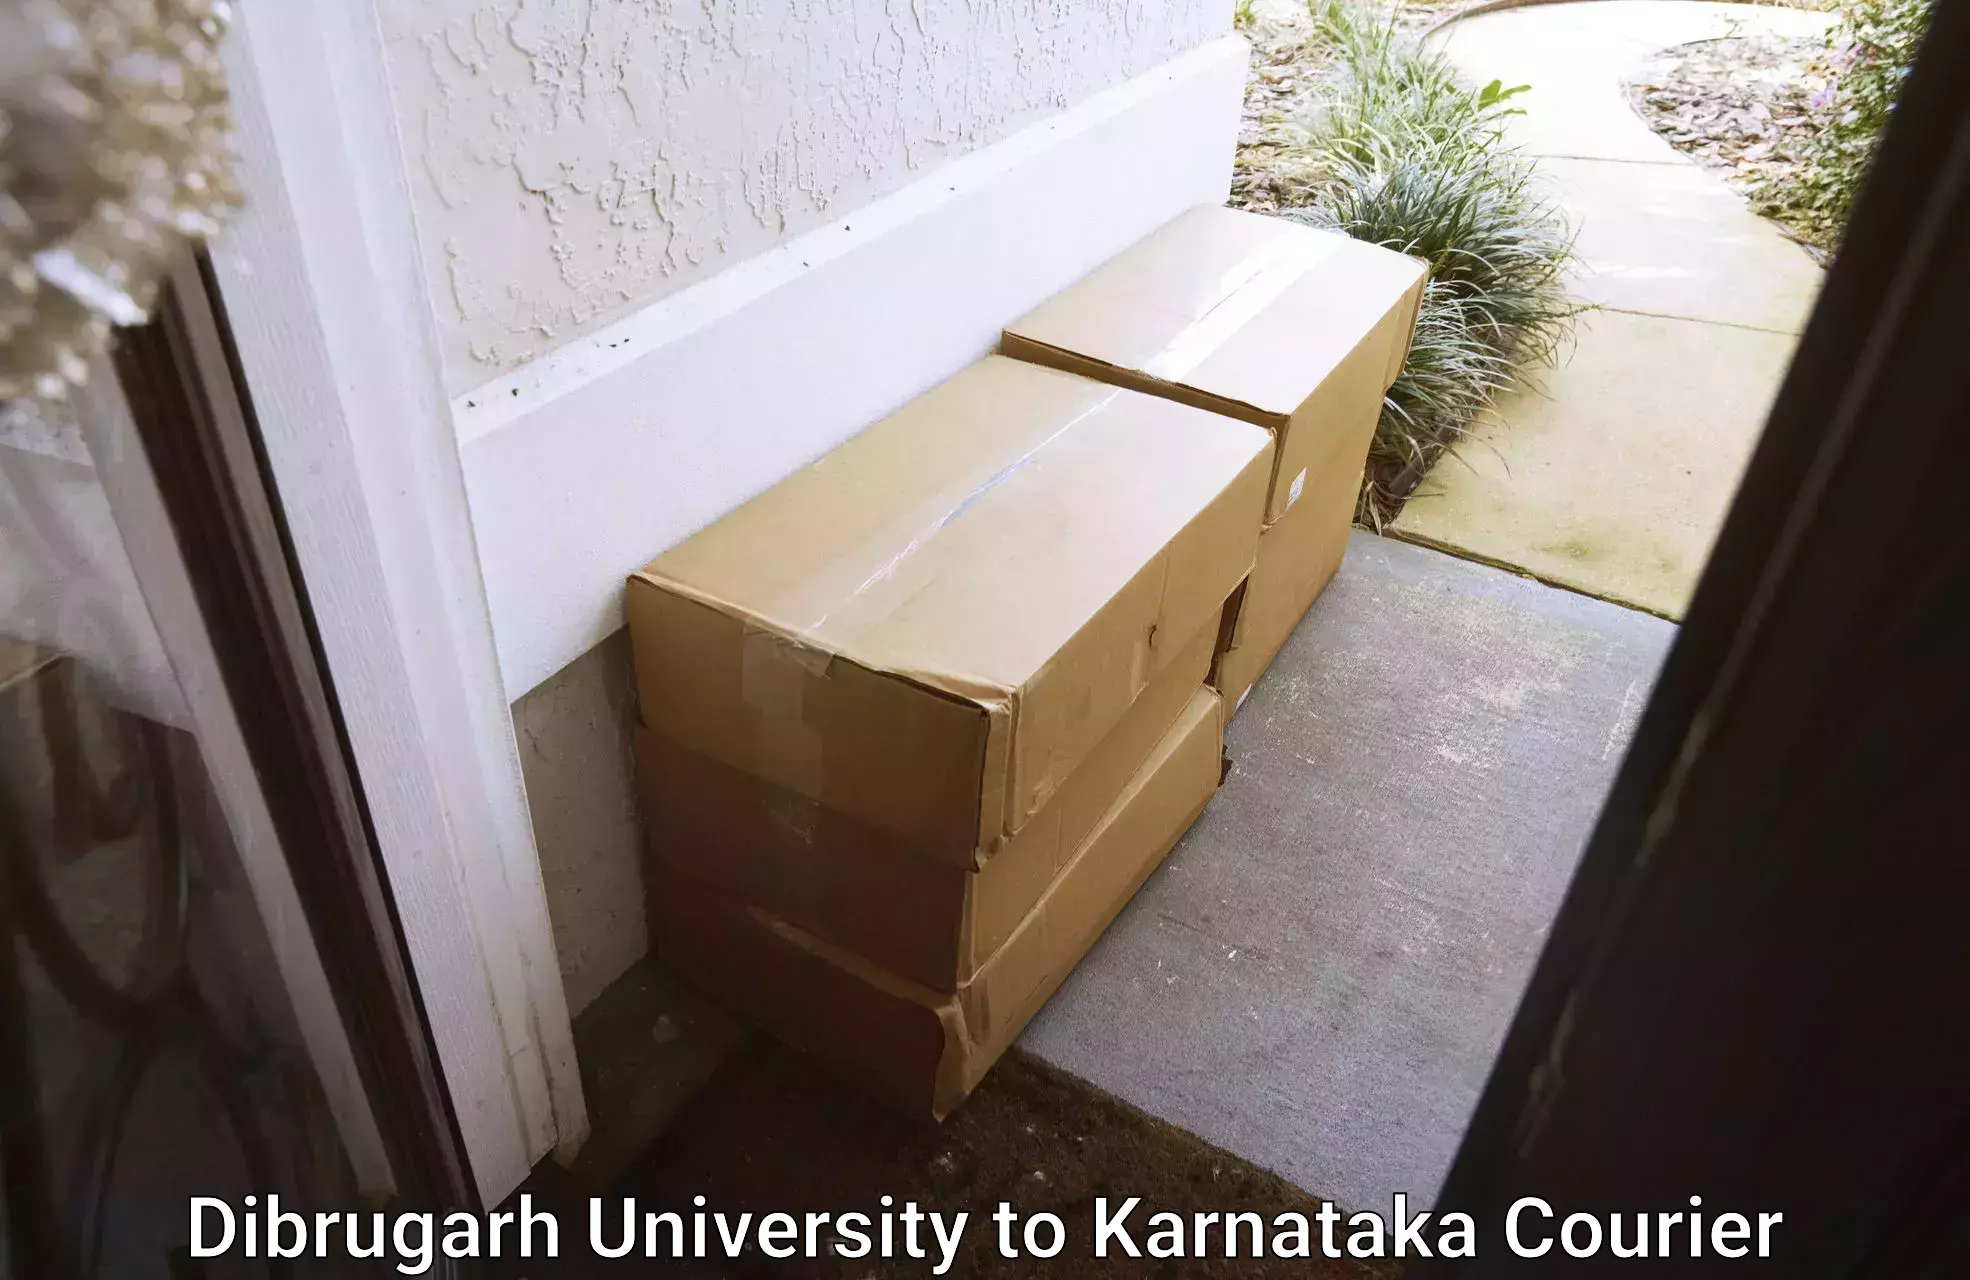 Bulk courier orders Dibrugarh University to Mangalore Port